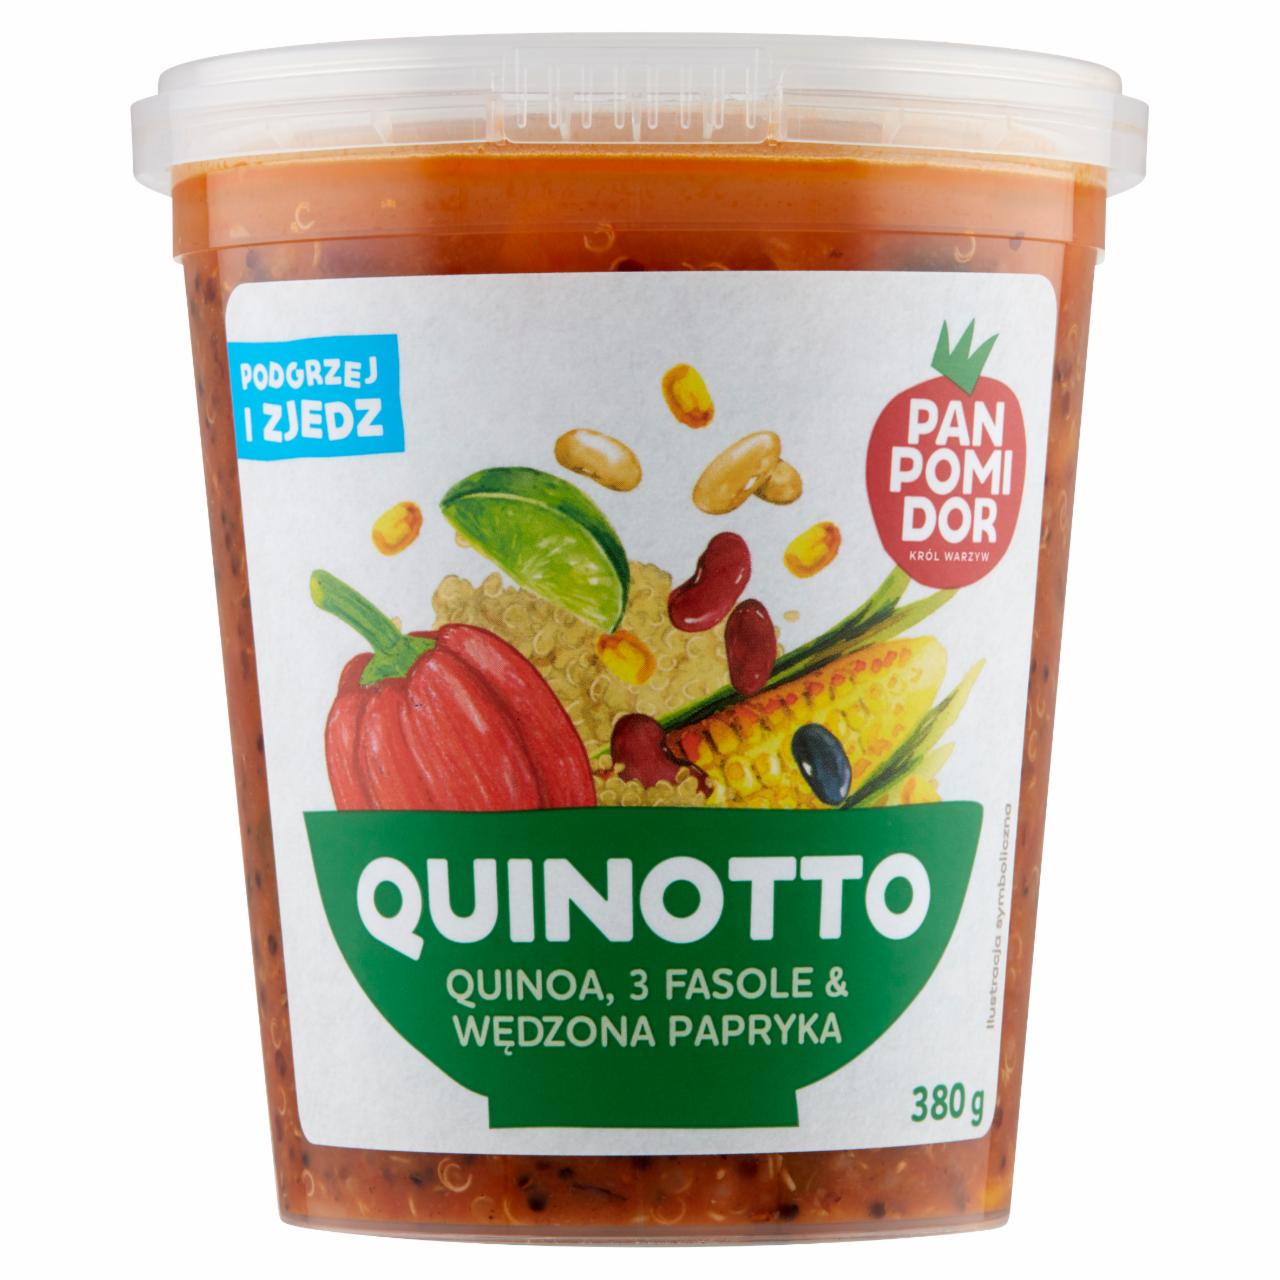 Zdjęcia - Pan Pomidor Quinotto quinoa 3 fasole & wędzona papryka 380 g